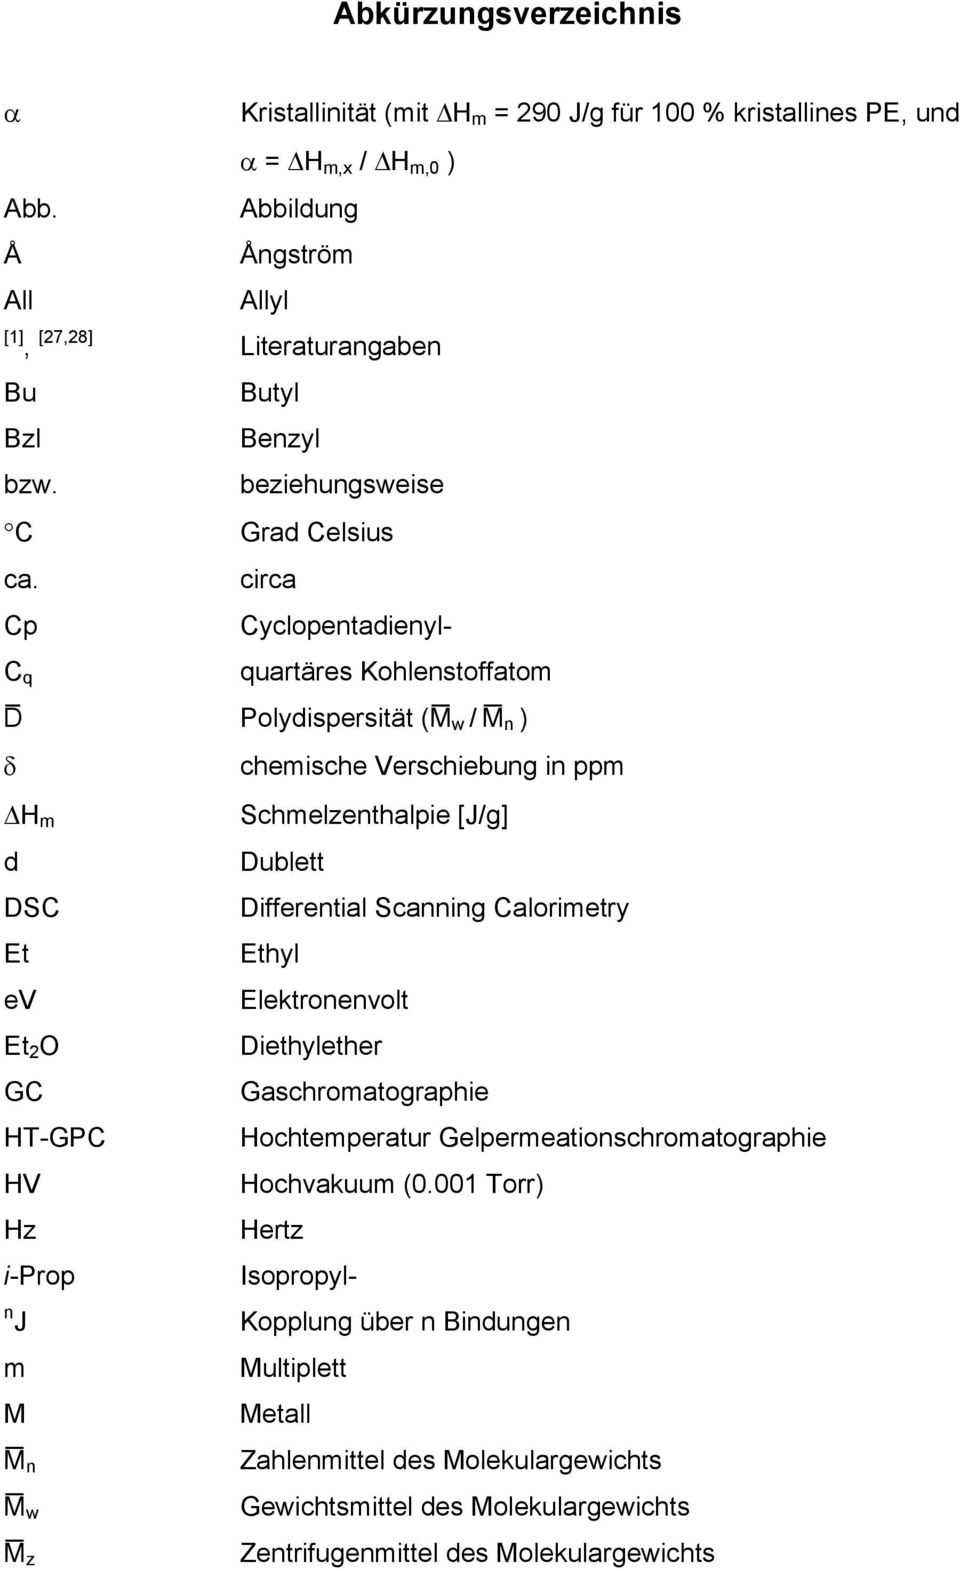 circa Cp Cyclopentadienyl- D Polydispersität (M w / M n ) δ chemische erschiebung in ppm H m Schmelzenthalpie [J/g] d Dublett DSC Differential Scanning Calorimetry Et Ethyl e Elektronenvolt Et